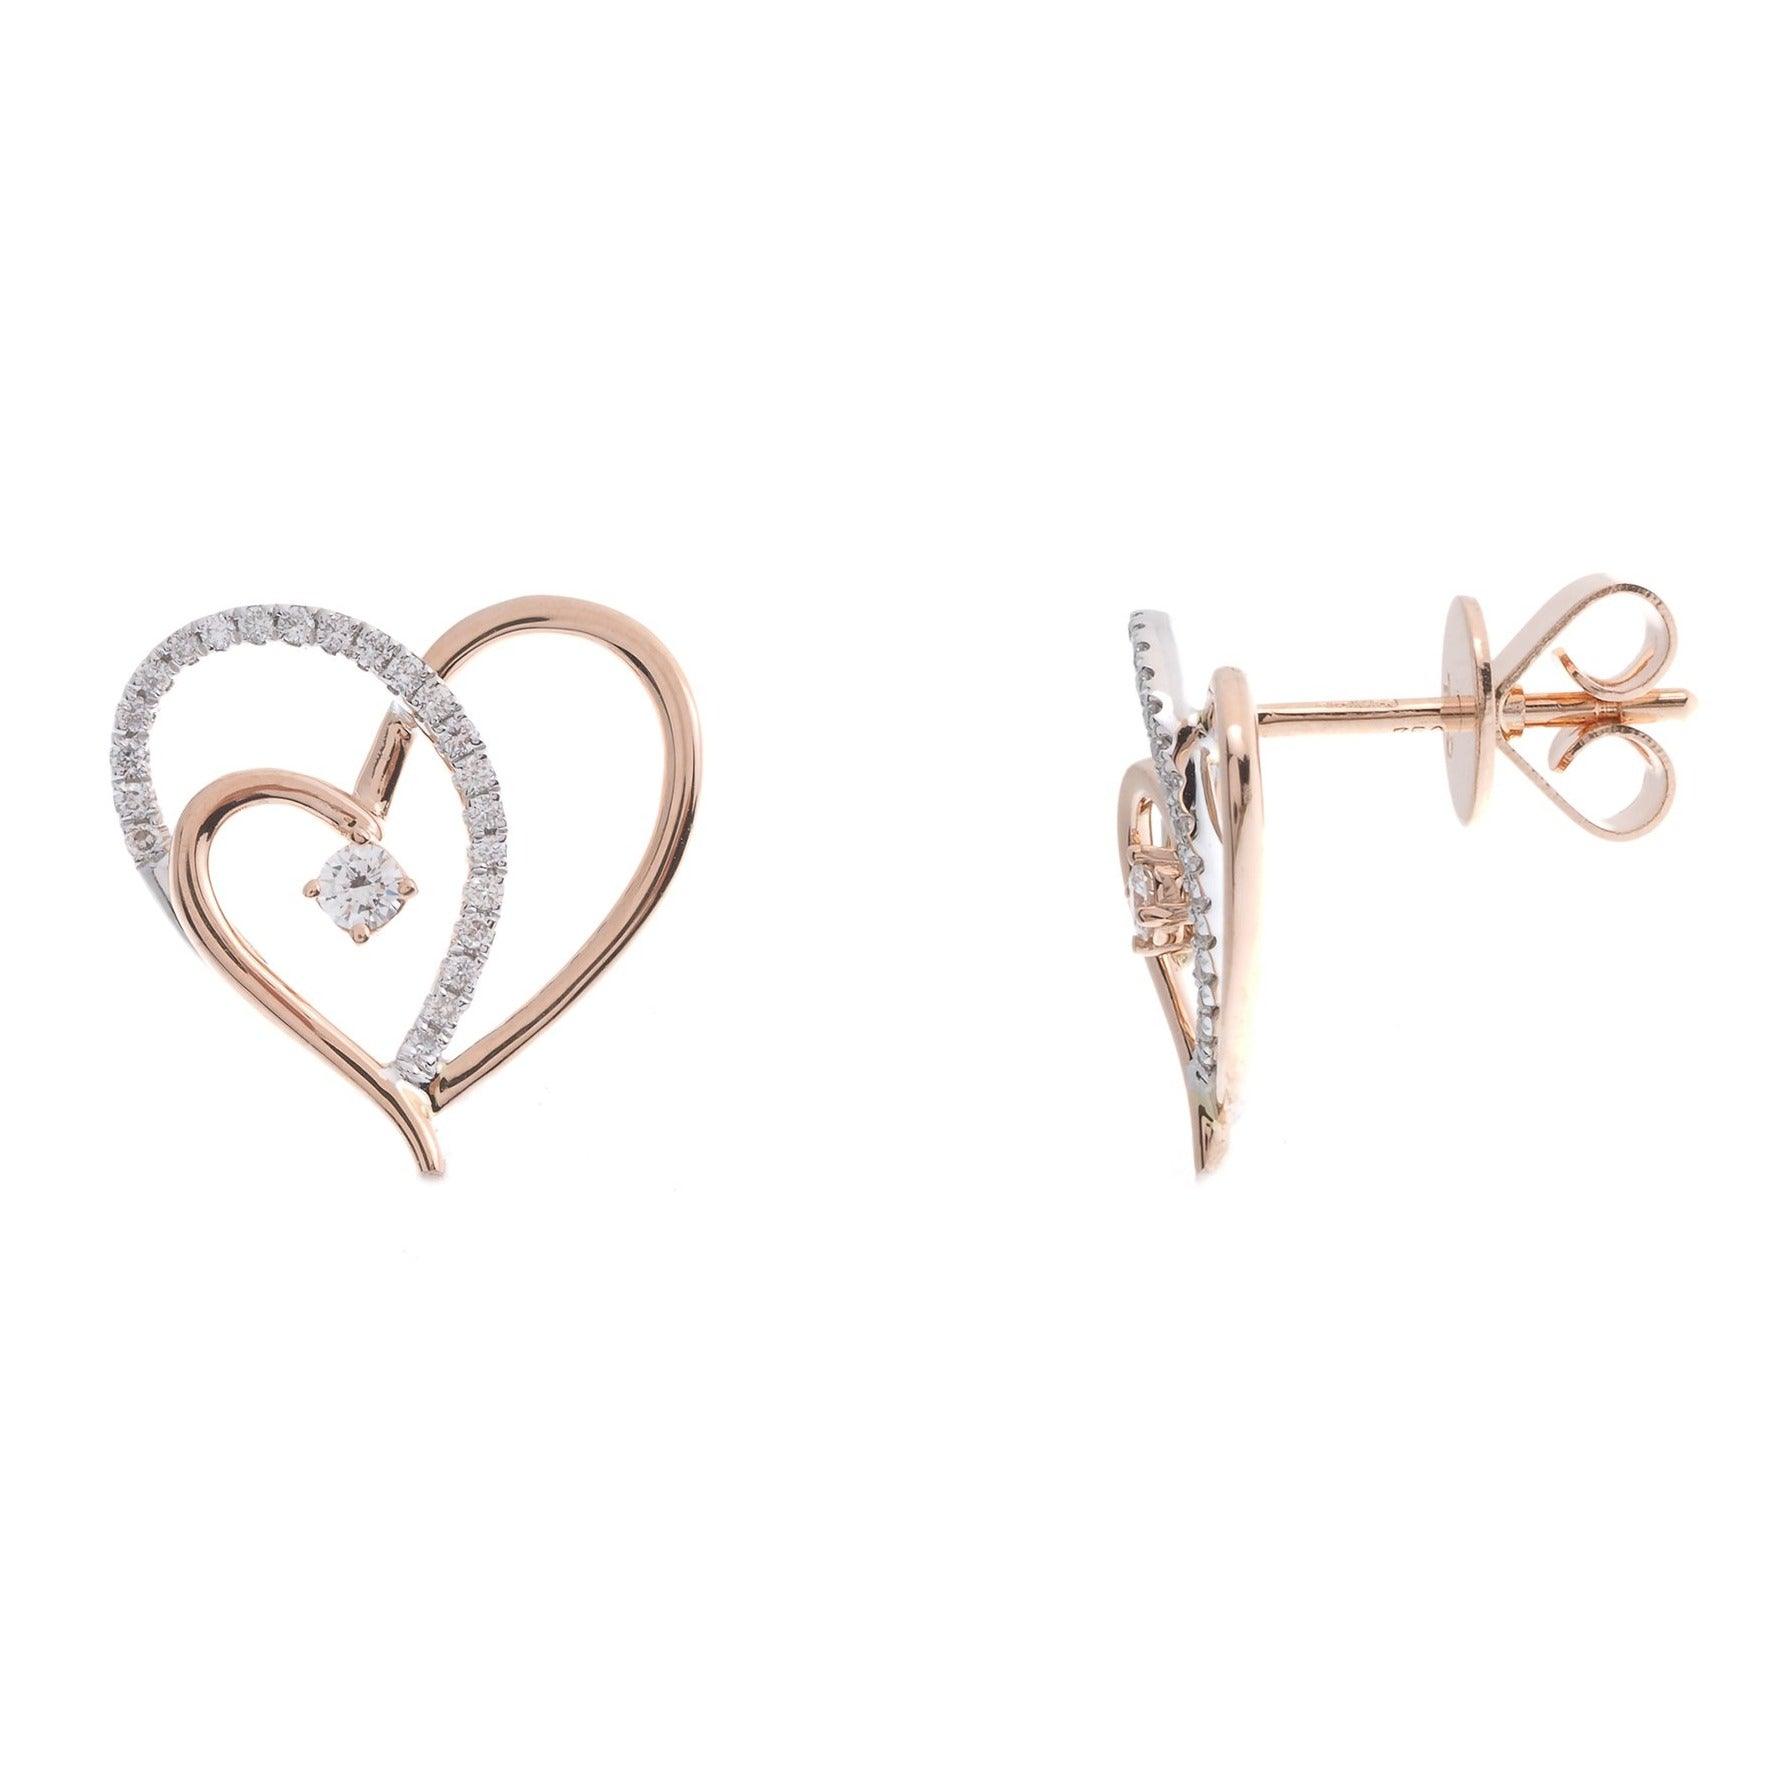 18ct Rose and White Gold Diamond Heart Design Earrings with push backs E43265-1